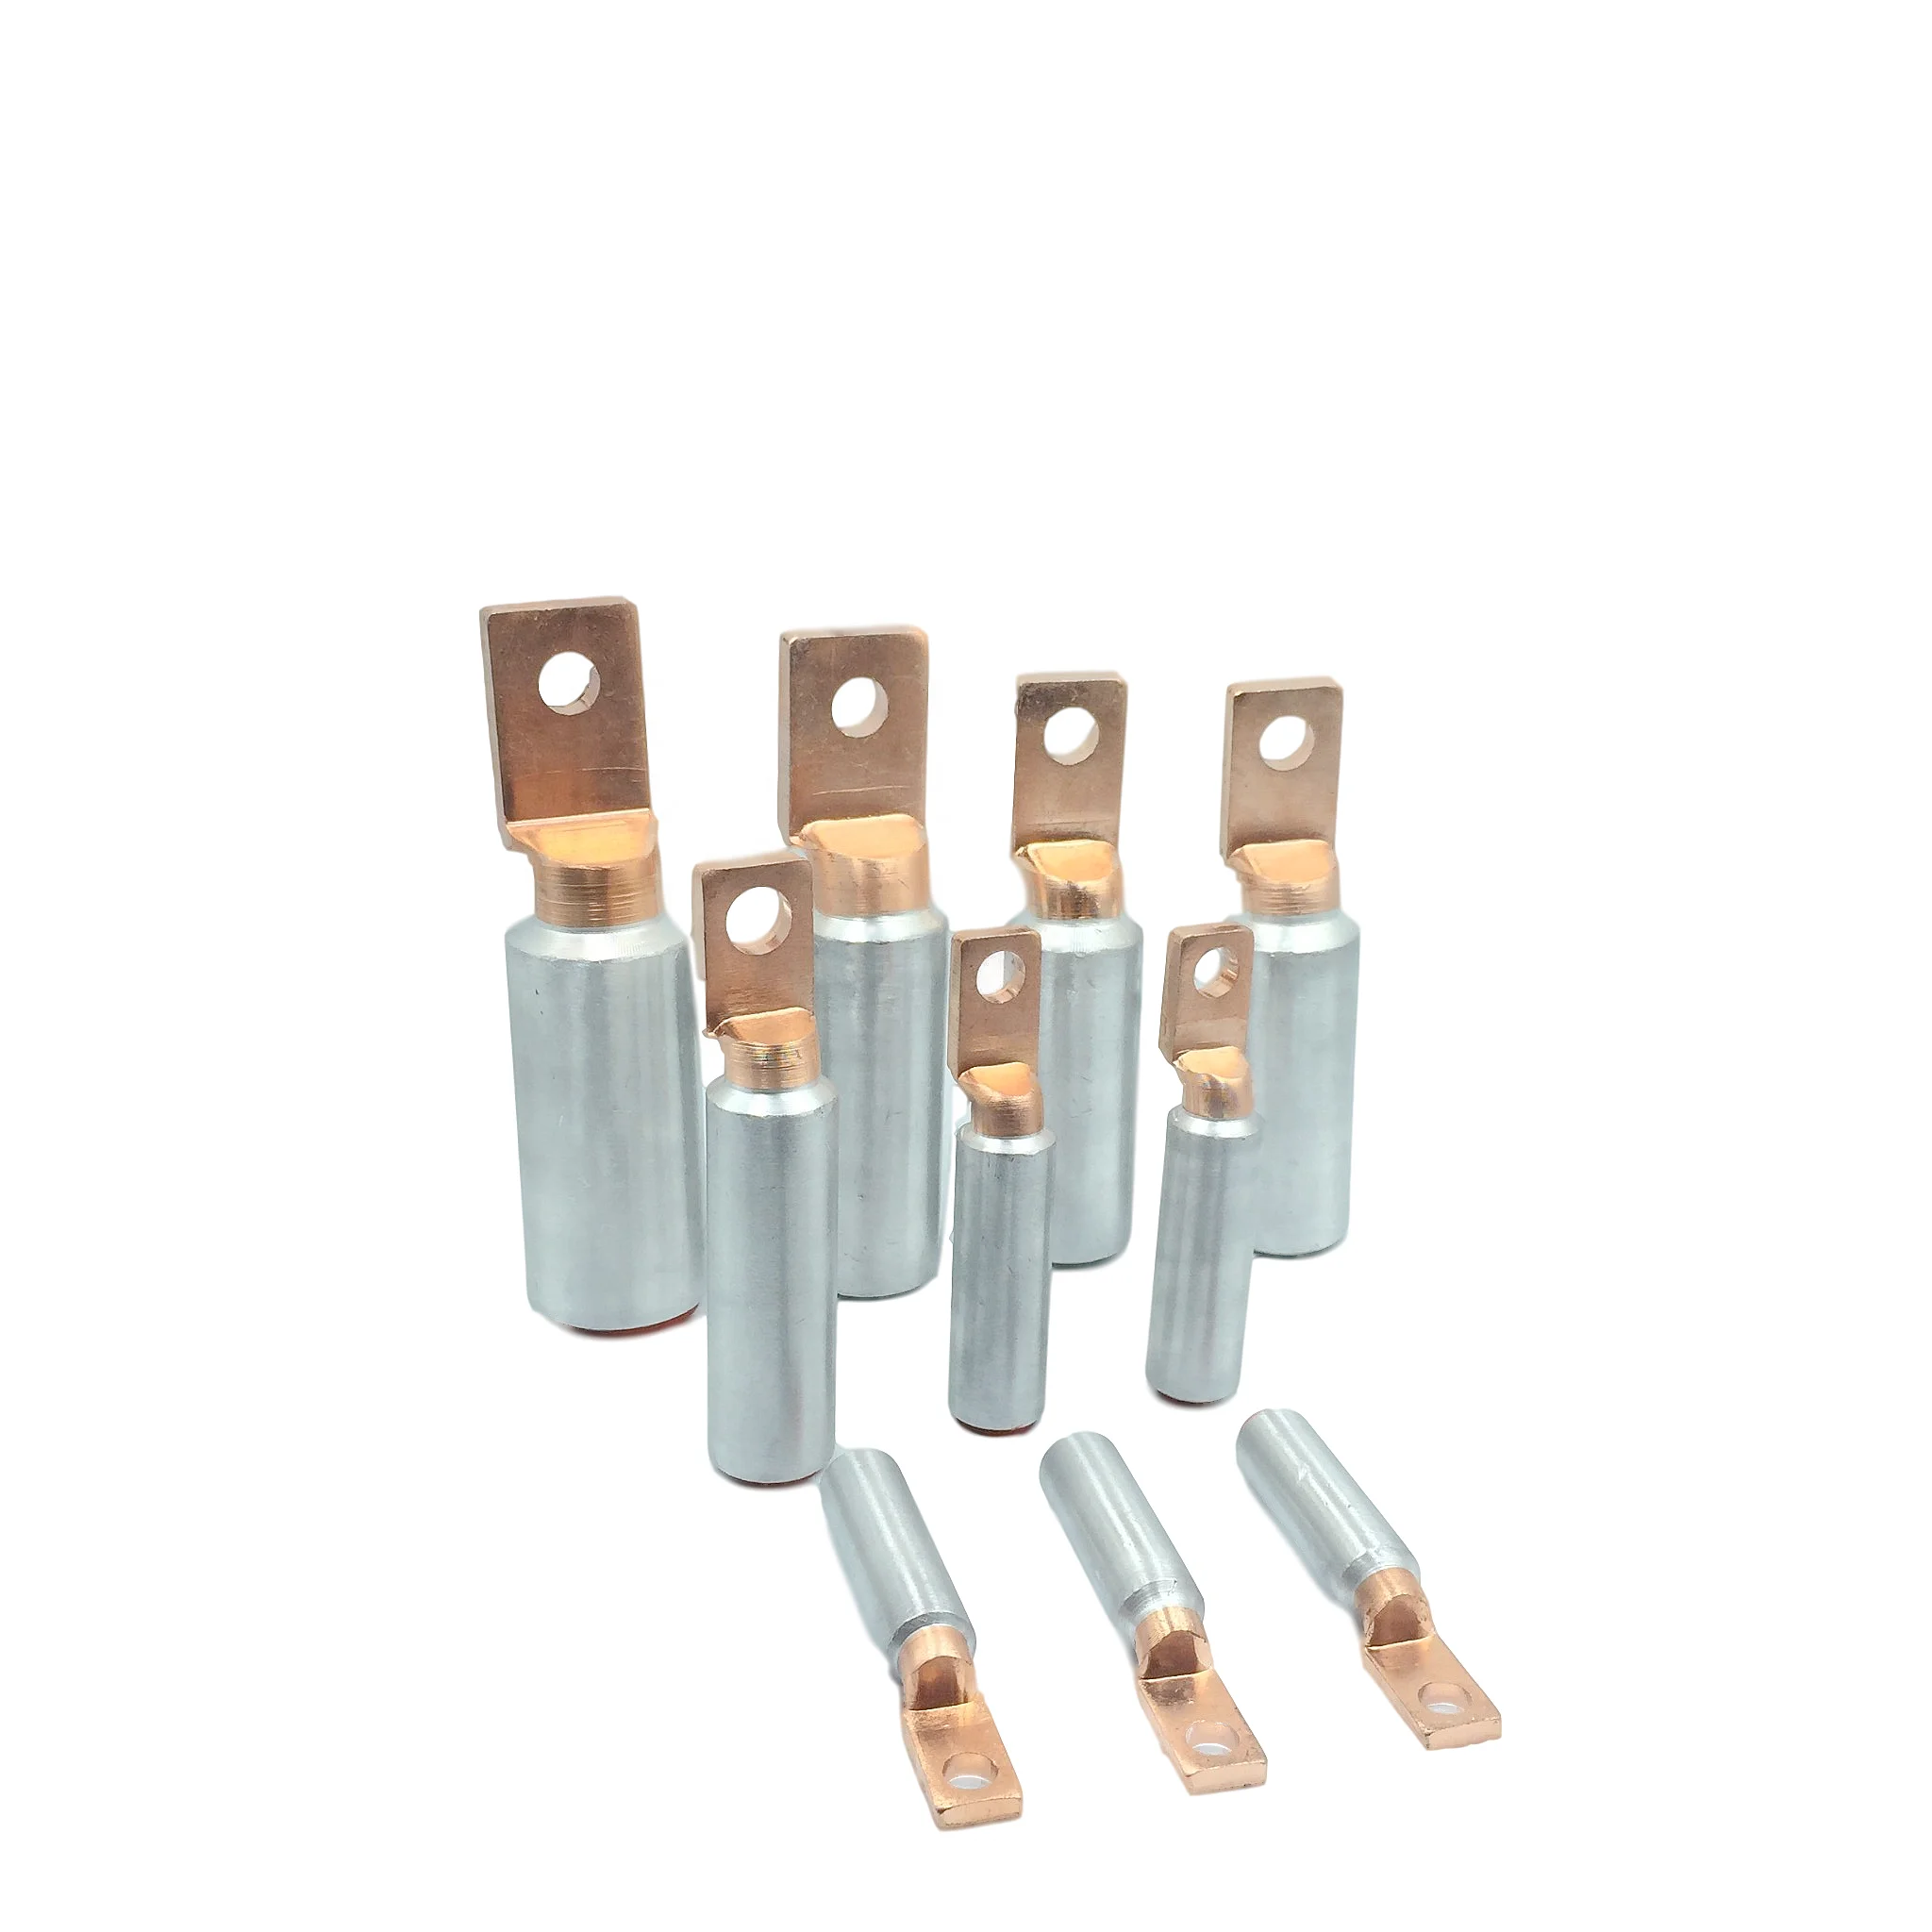 
DTL Series Square head aluminum copper bimetallic cable lug connector terminal 